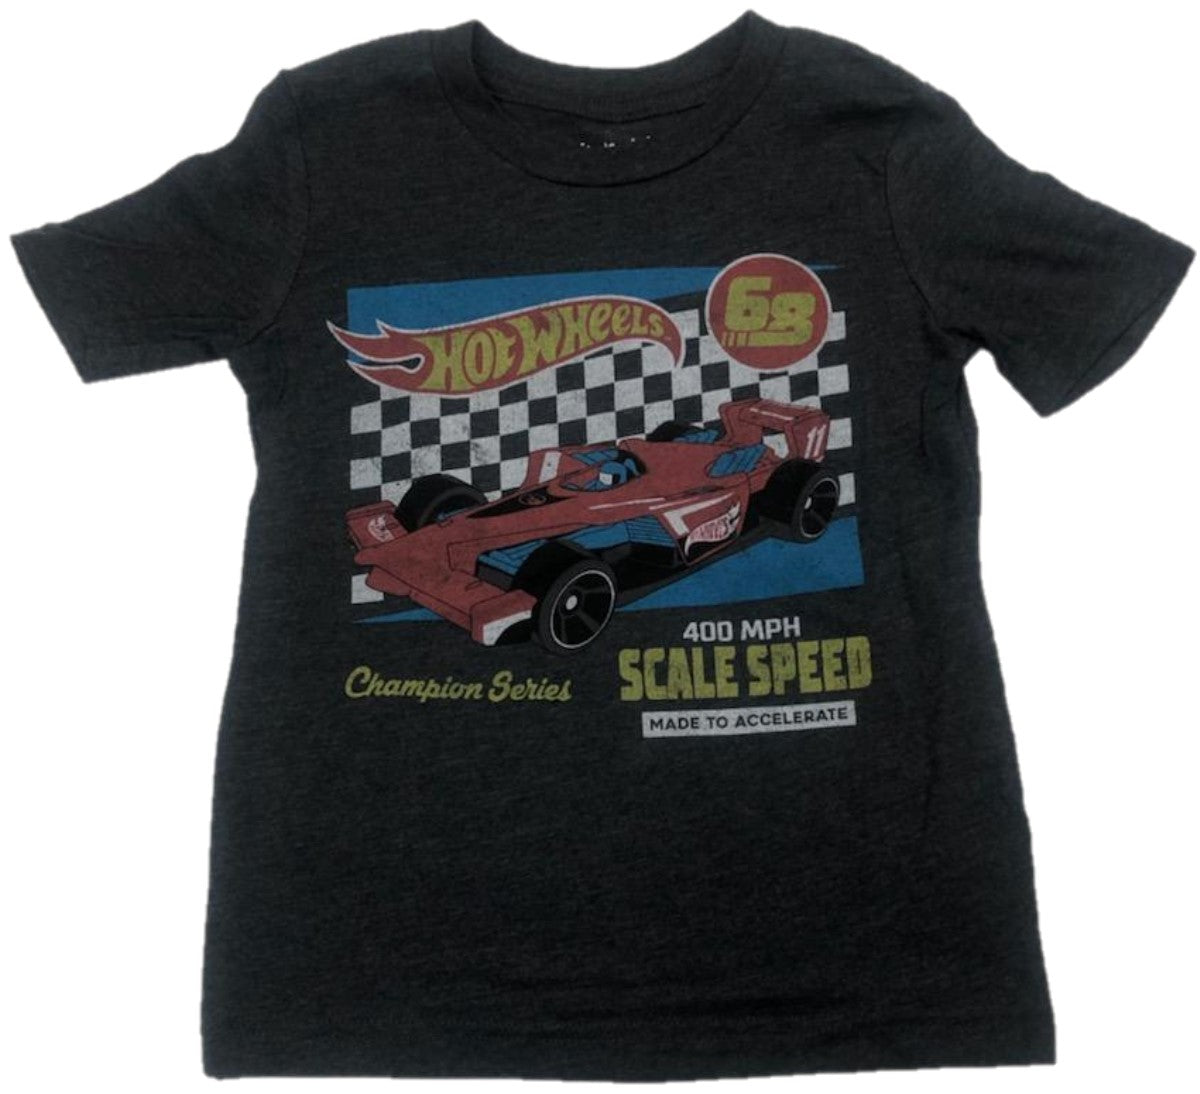 Hot Wheels 68 Champion Series Scale Speed Boys T-Shirt